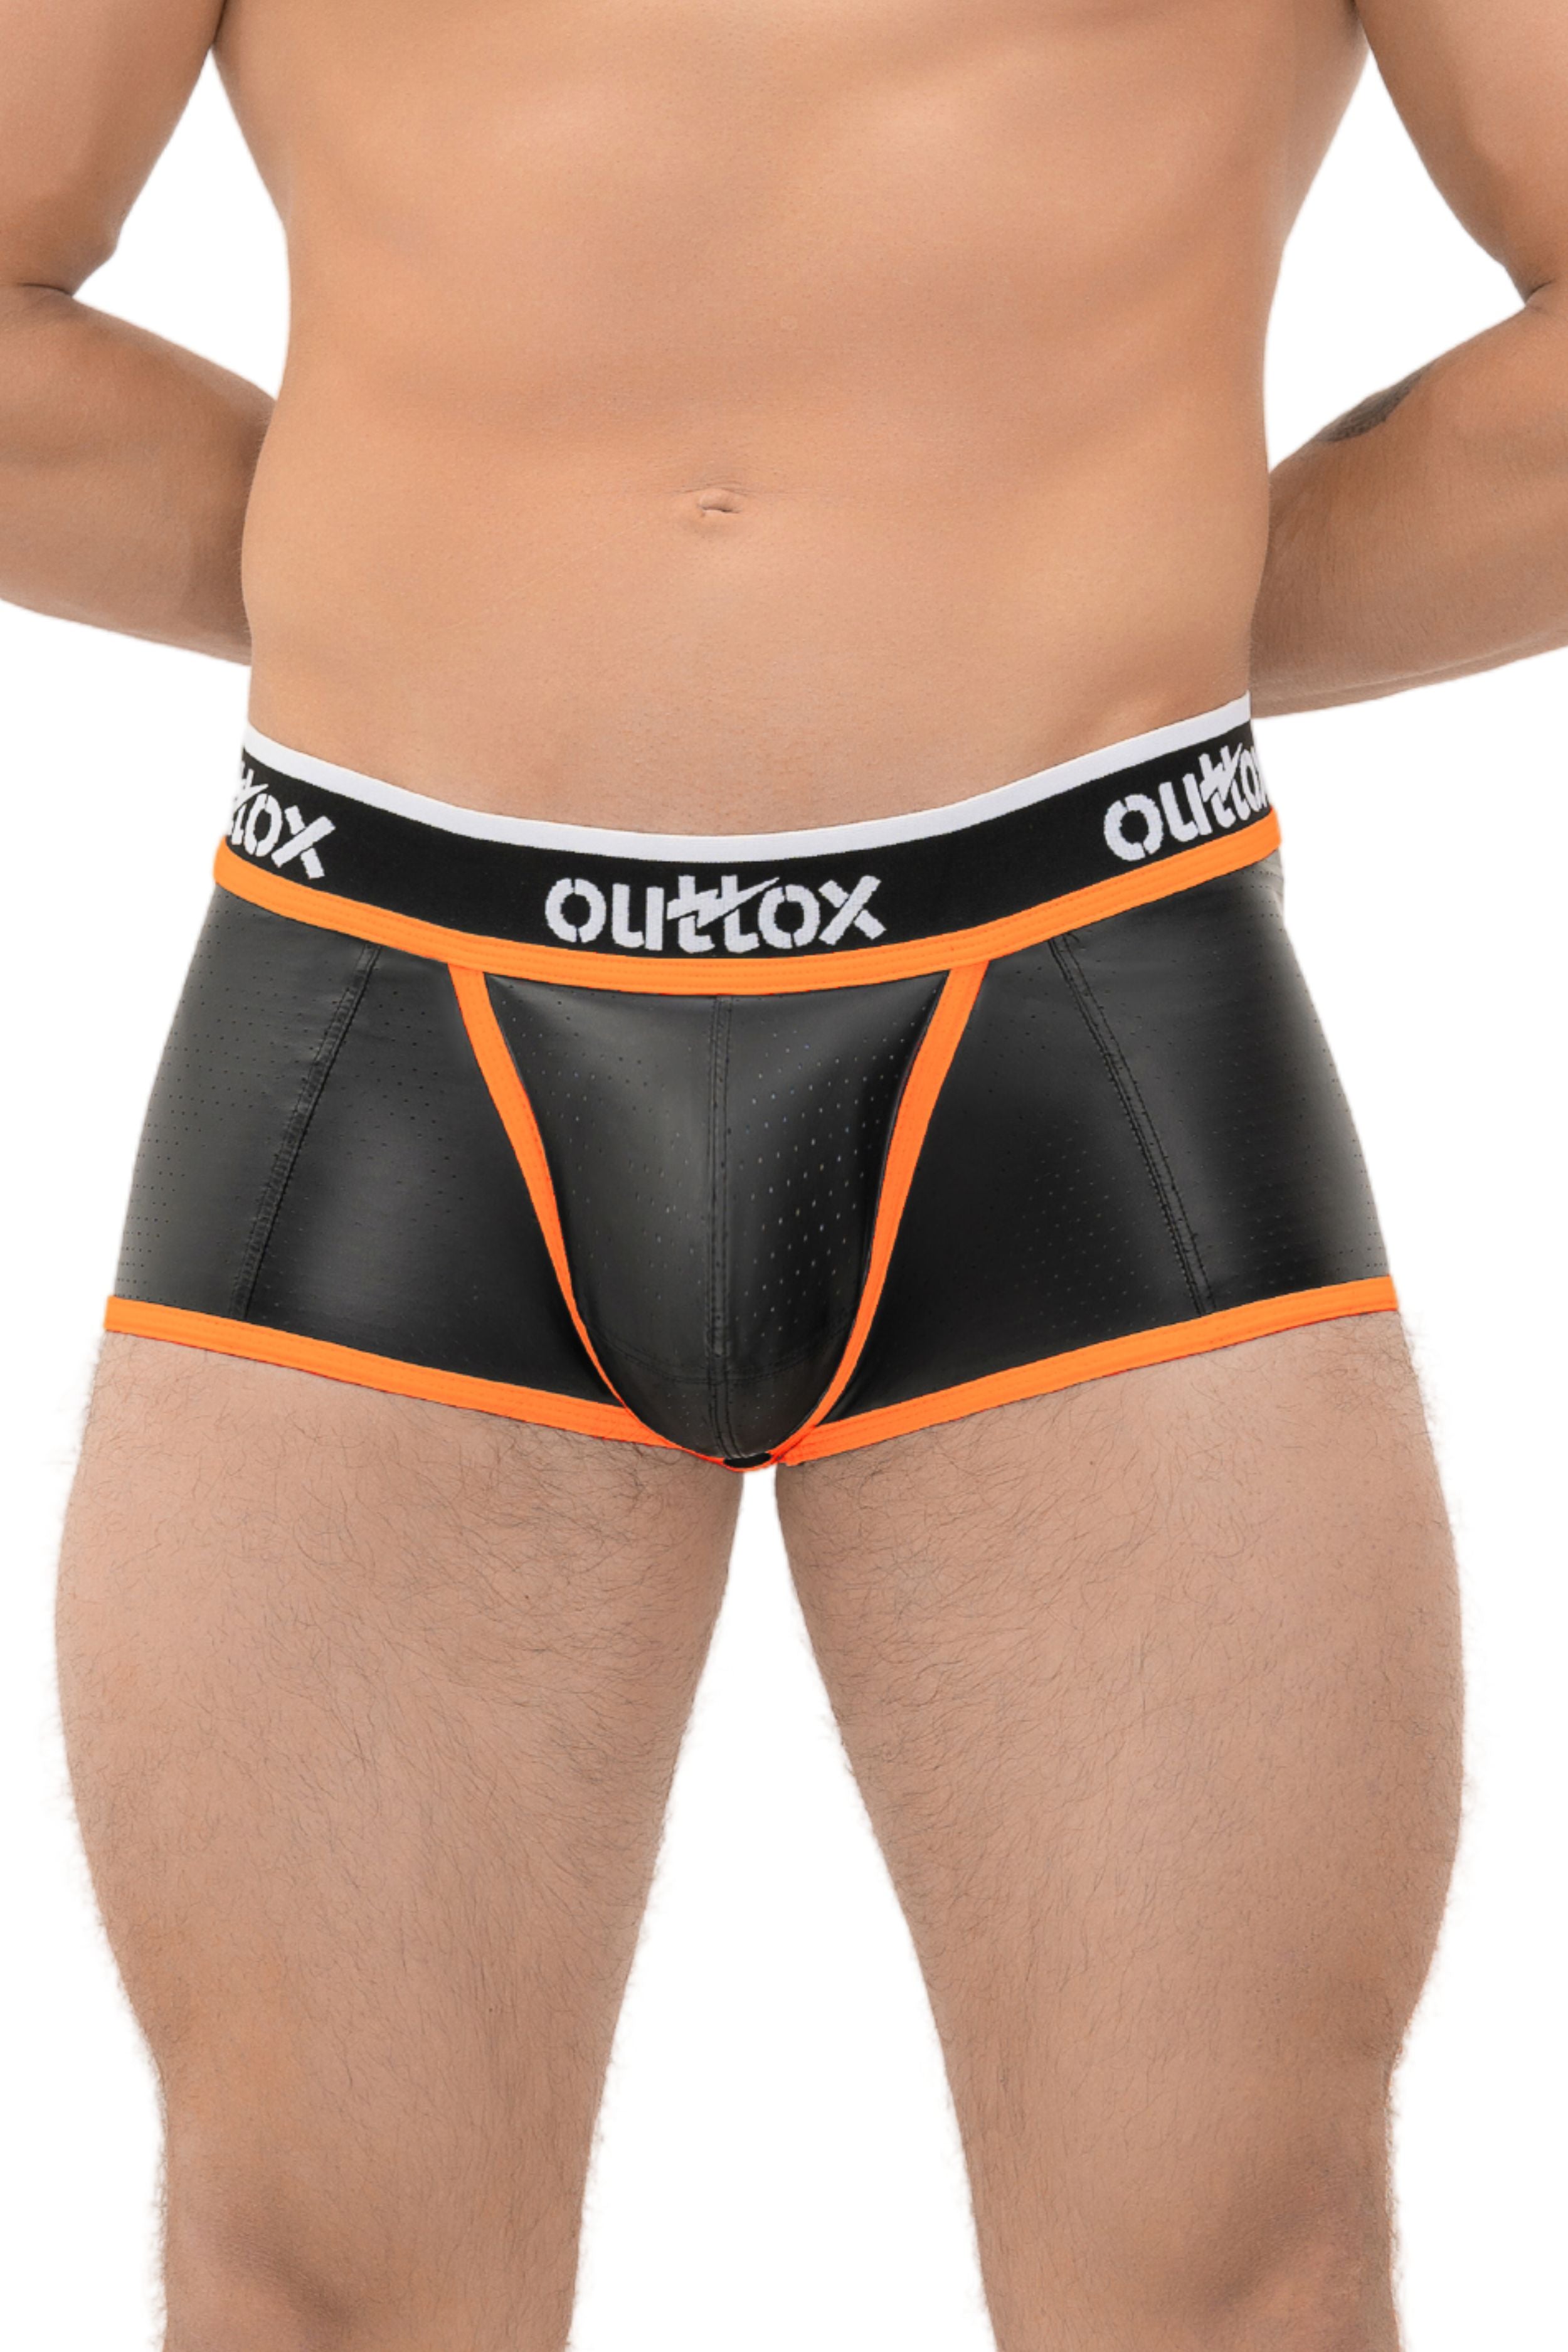 Outtox. Open kofferbakshort met kliksluiting. Zwart+oranje